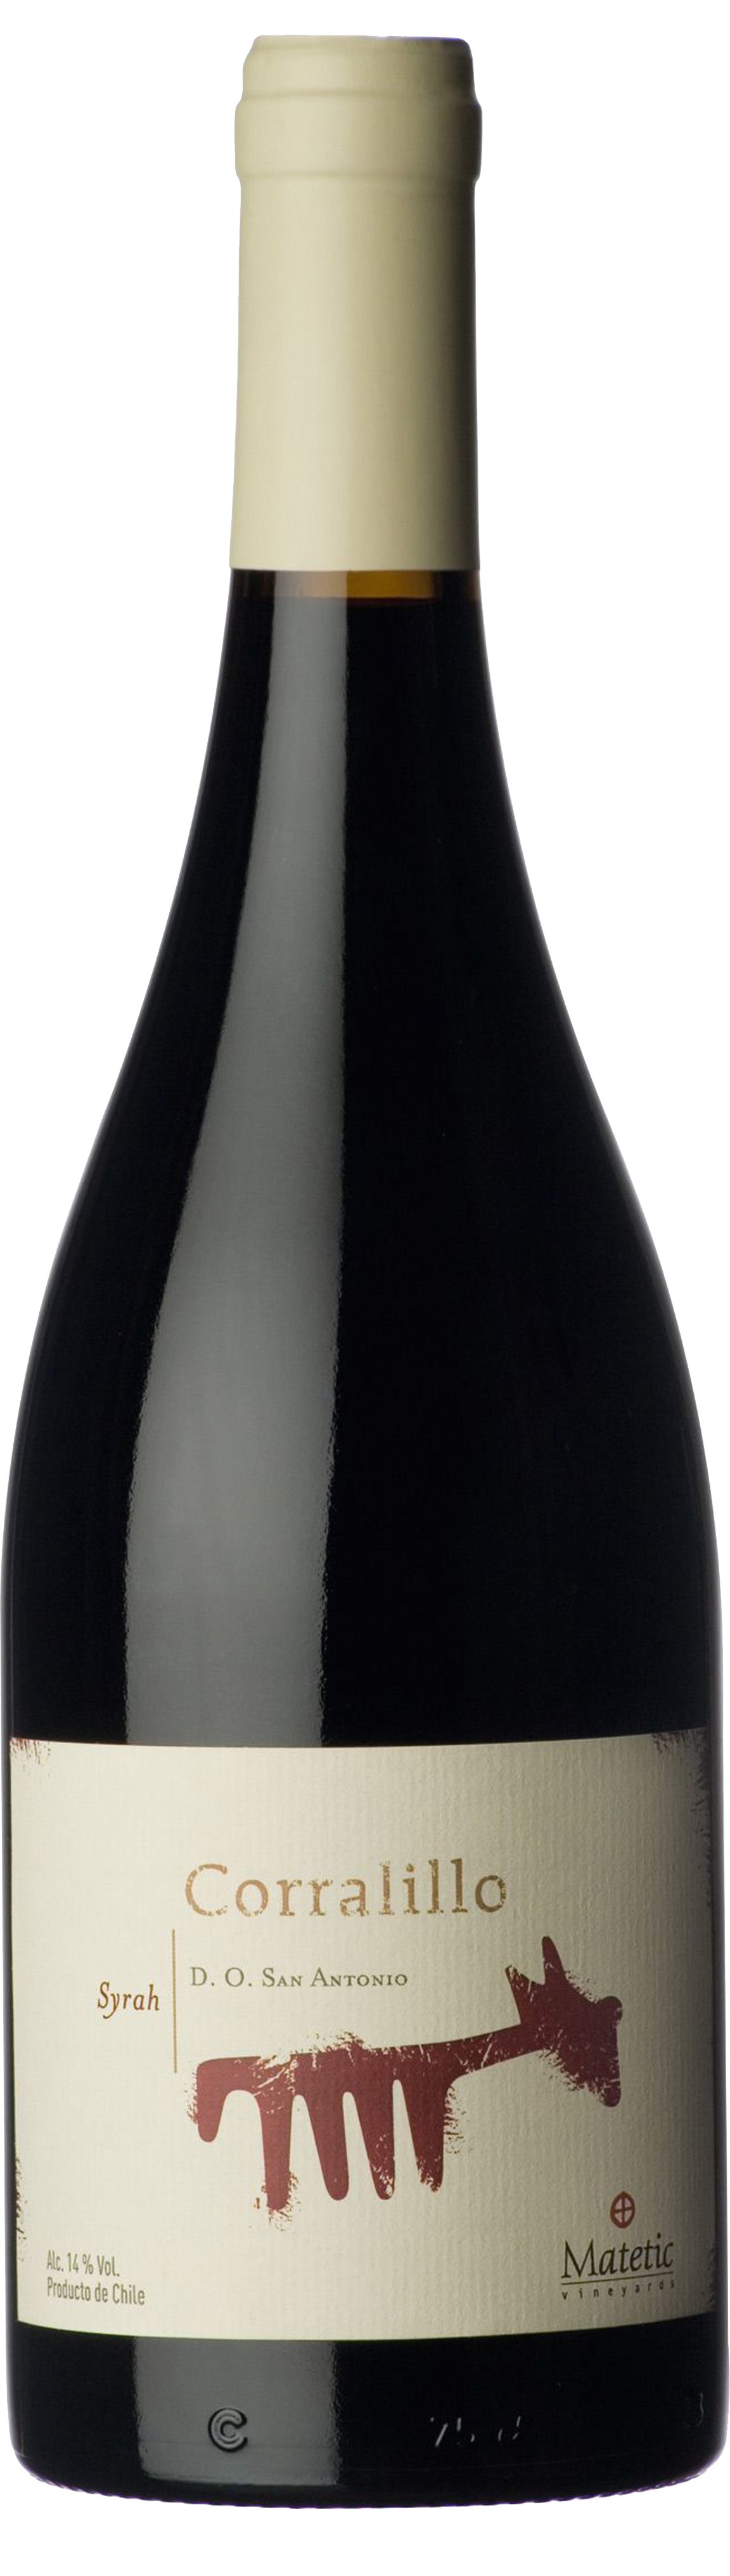 Bottle shot of 2012 Corralillo Syrah Organic